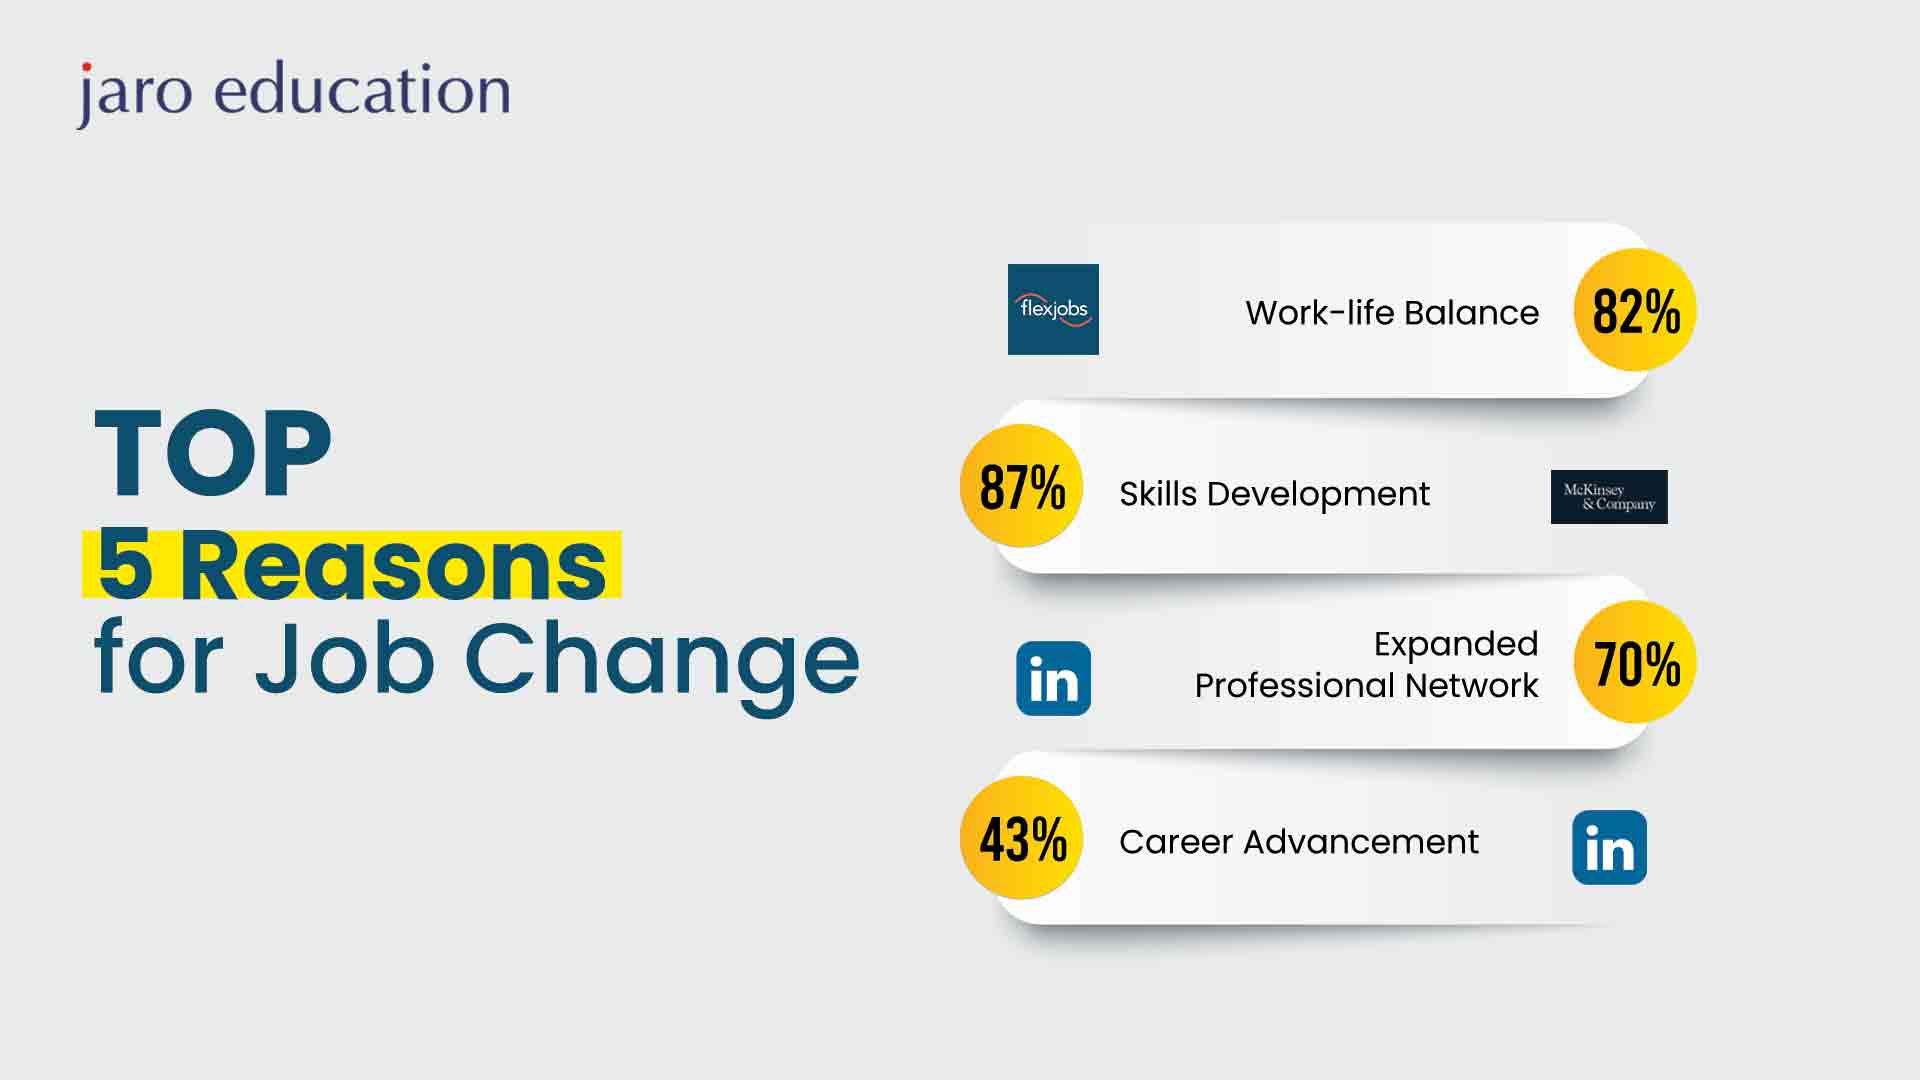 Top 5 Reasons for Job Change